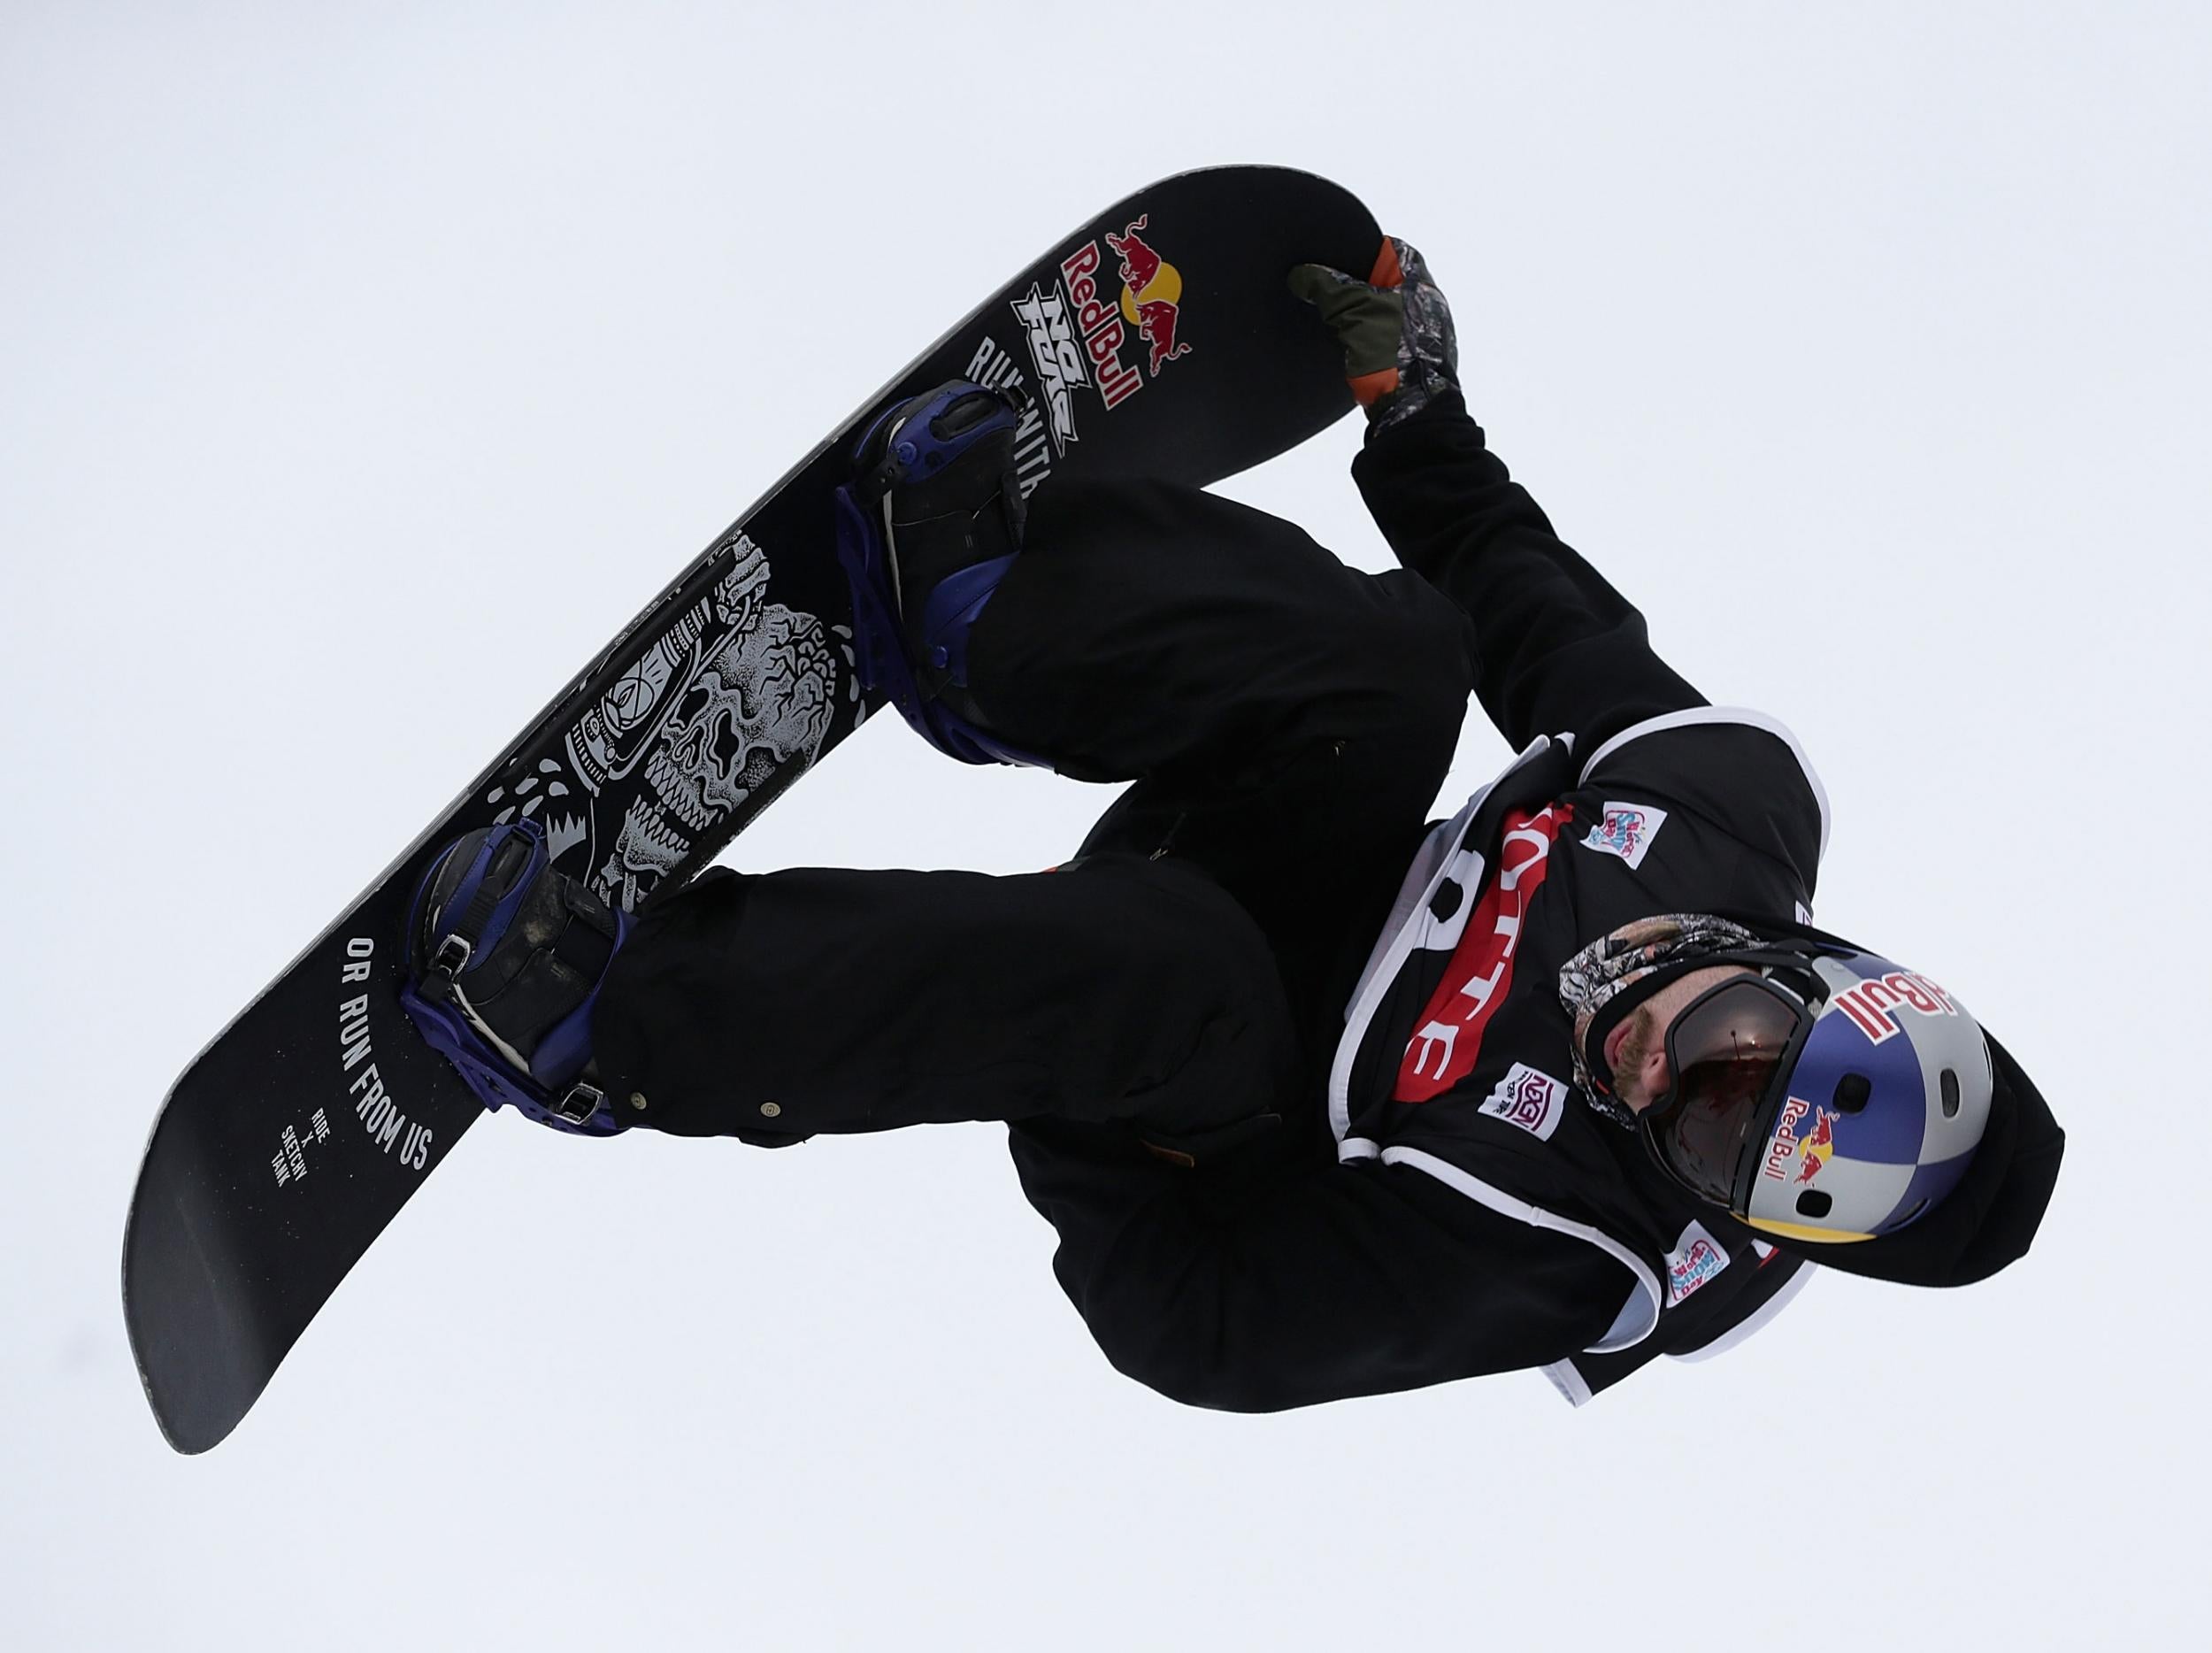 Billy Morgan finished sixth in Sochi